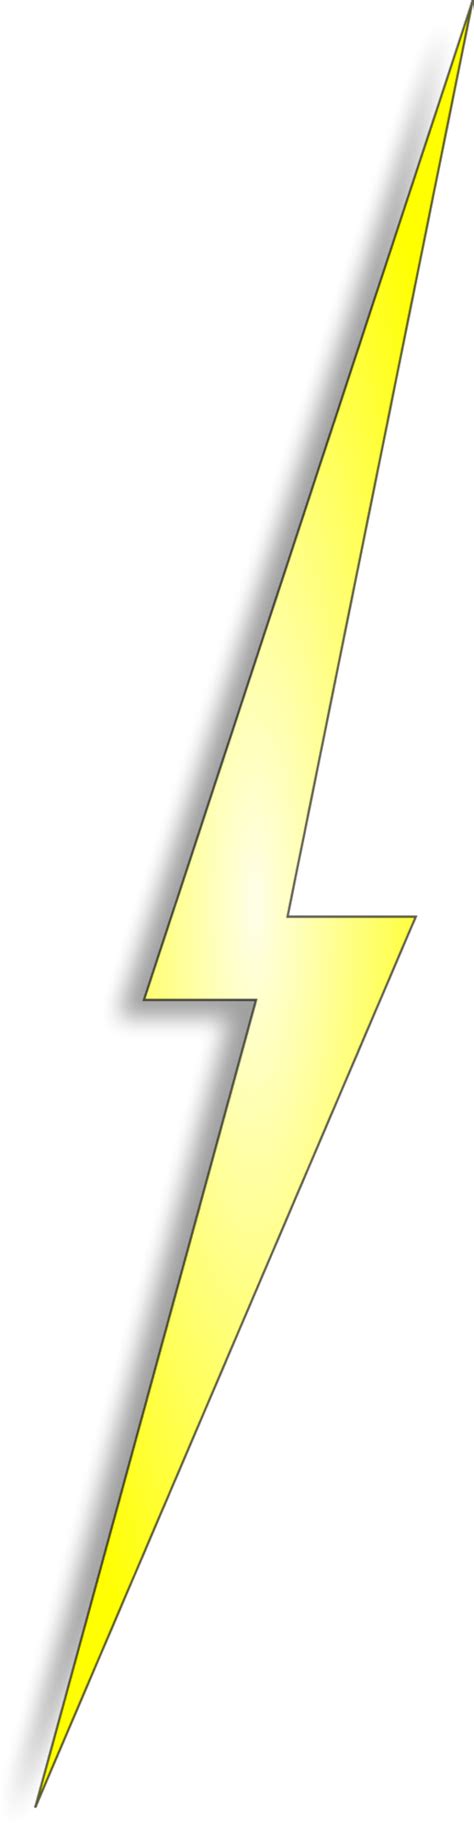 Electricity clipart lightning flash, Electricity lightning ...